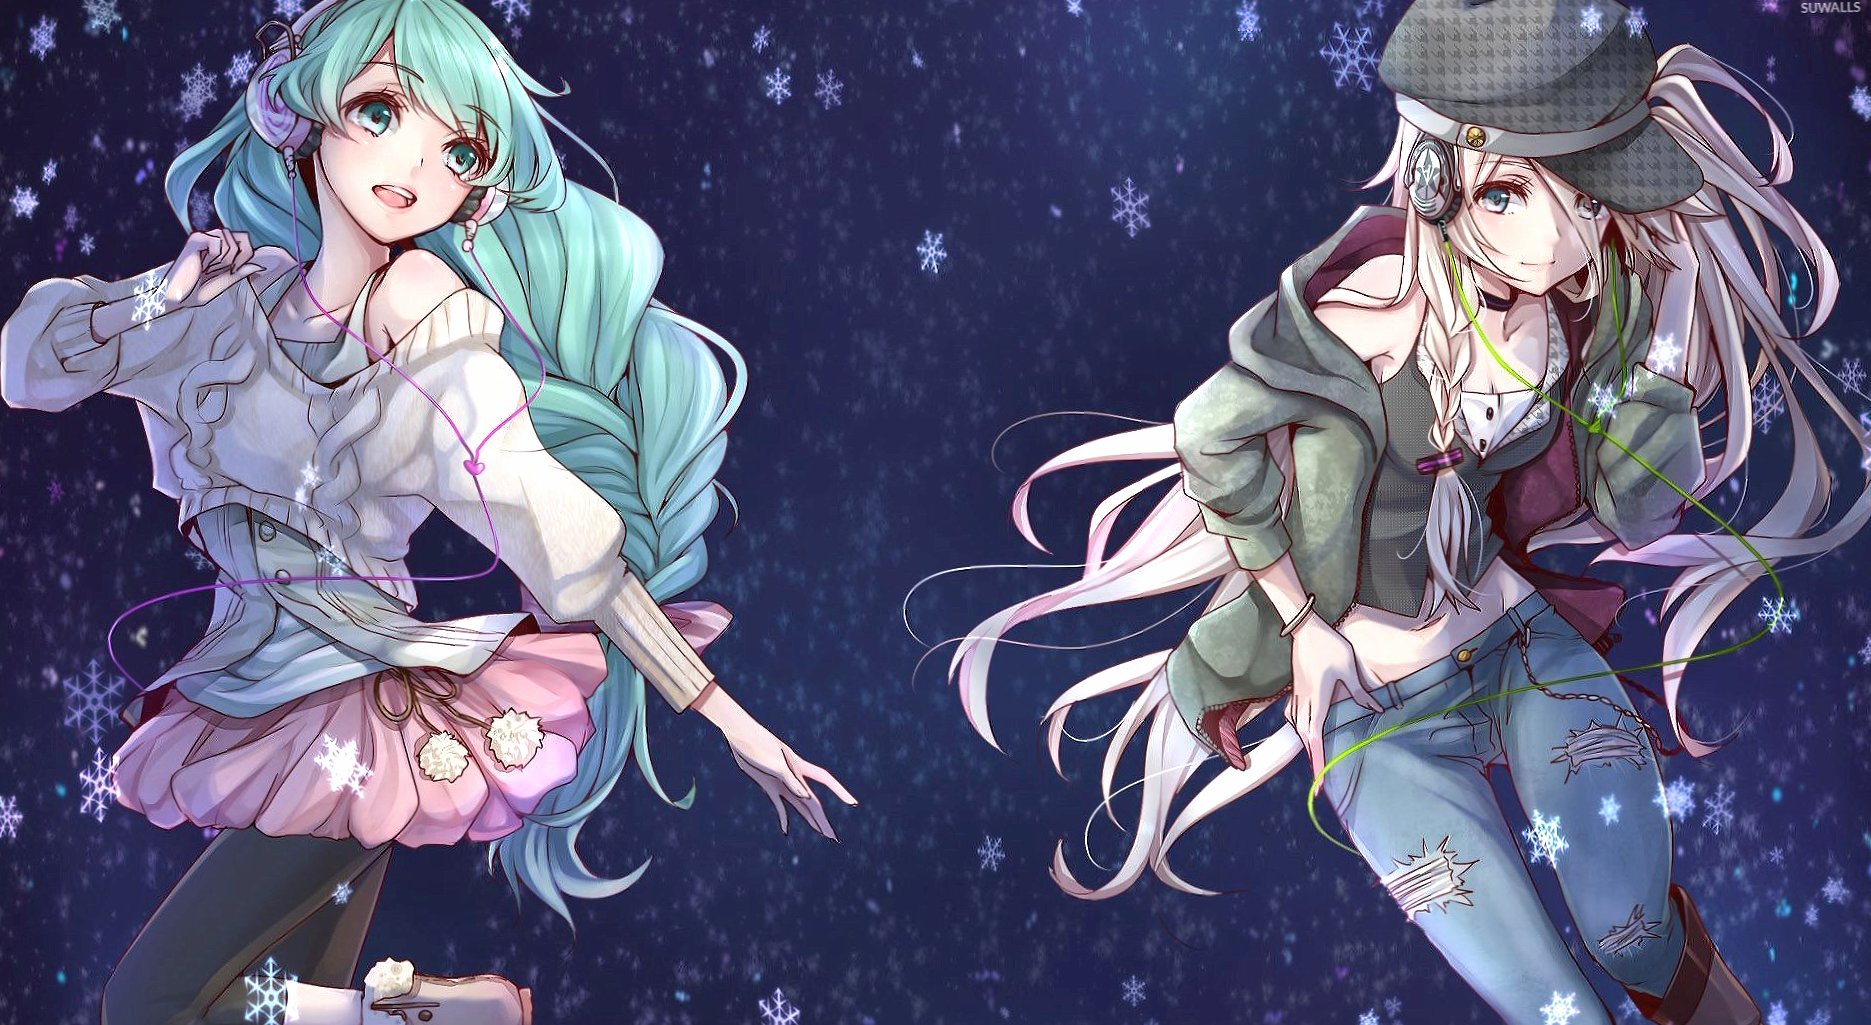 SeeU and Hatsune Miku with headphonea - Vocaloid wallpapers HD quality